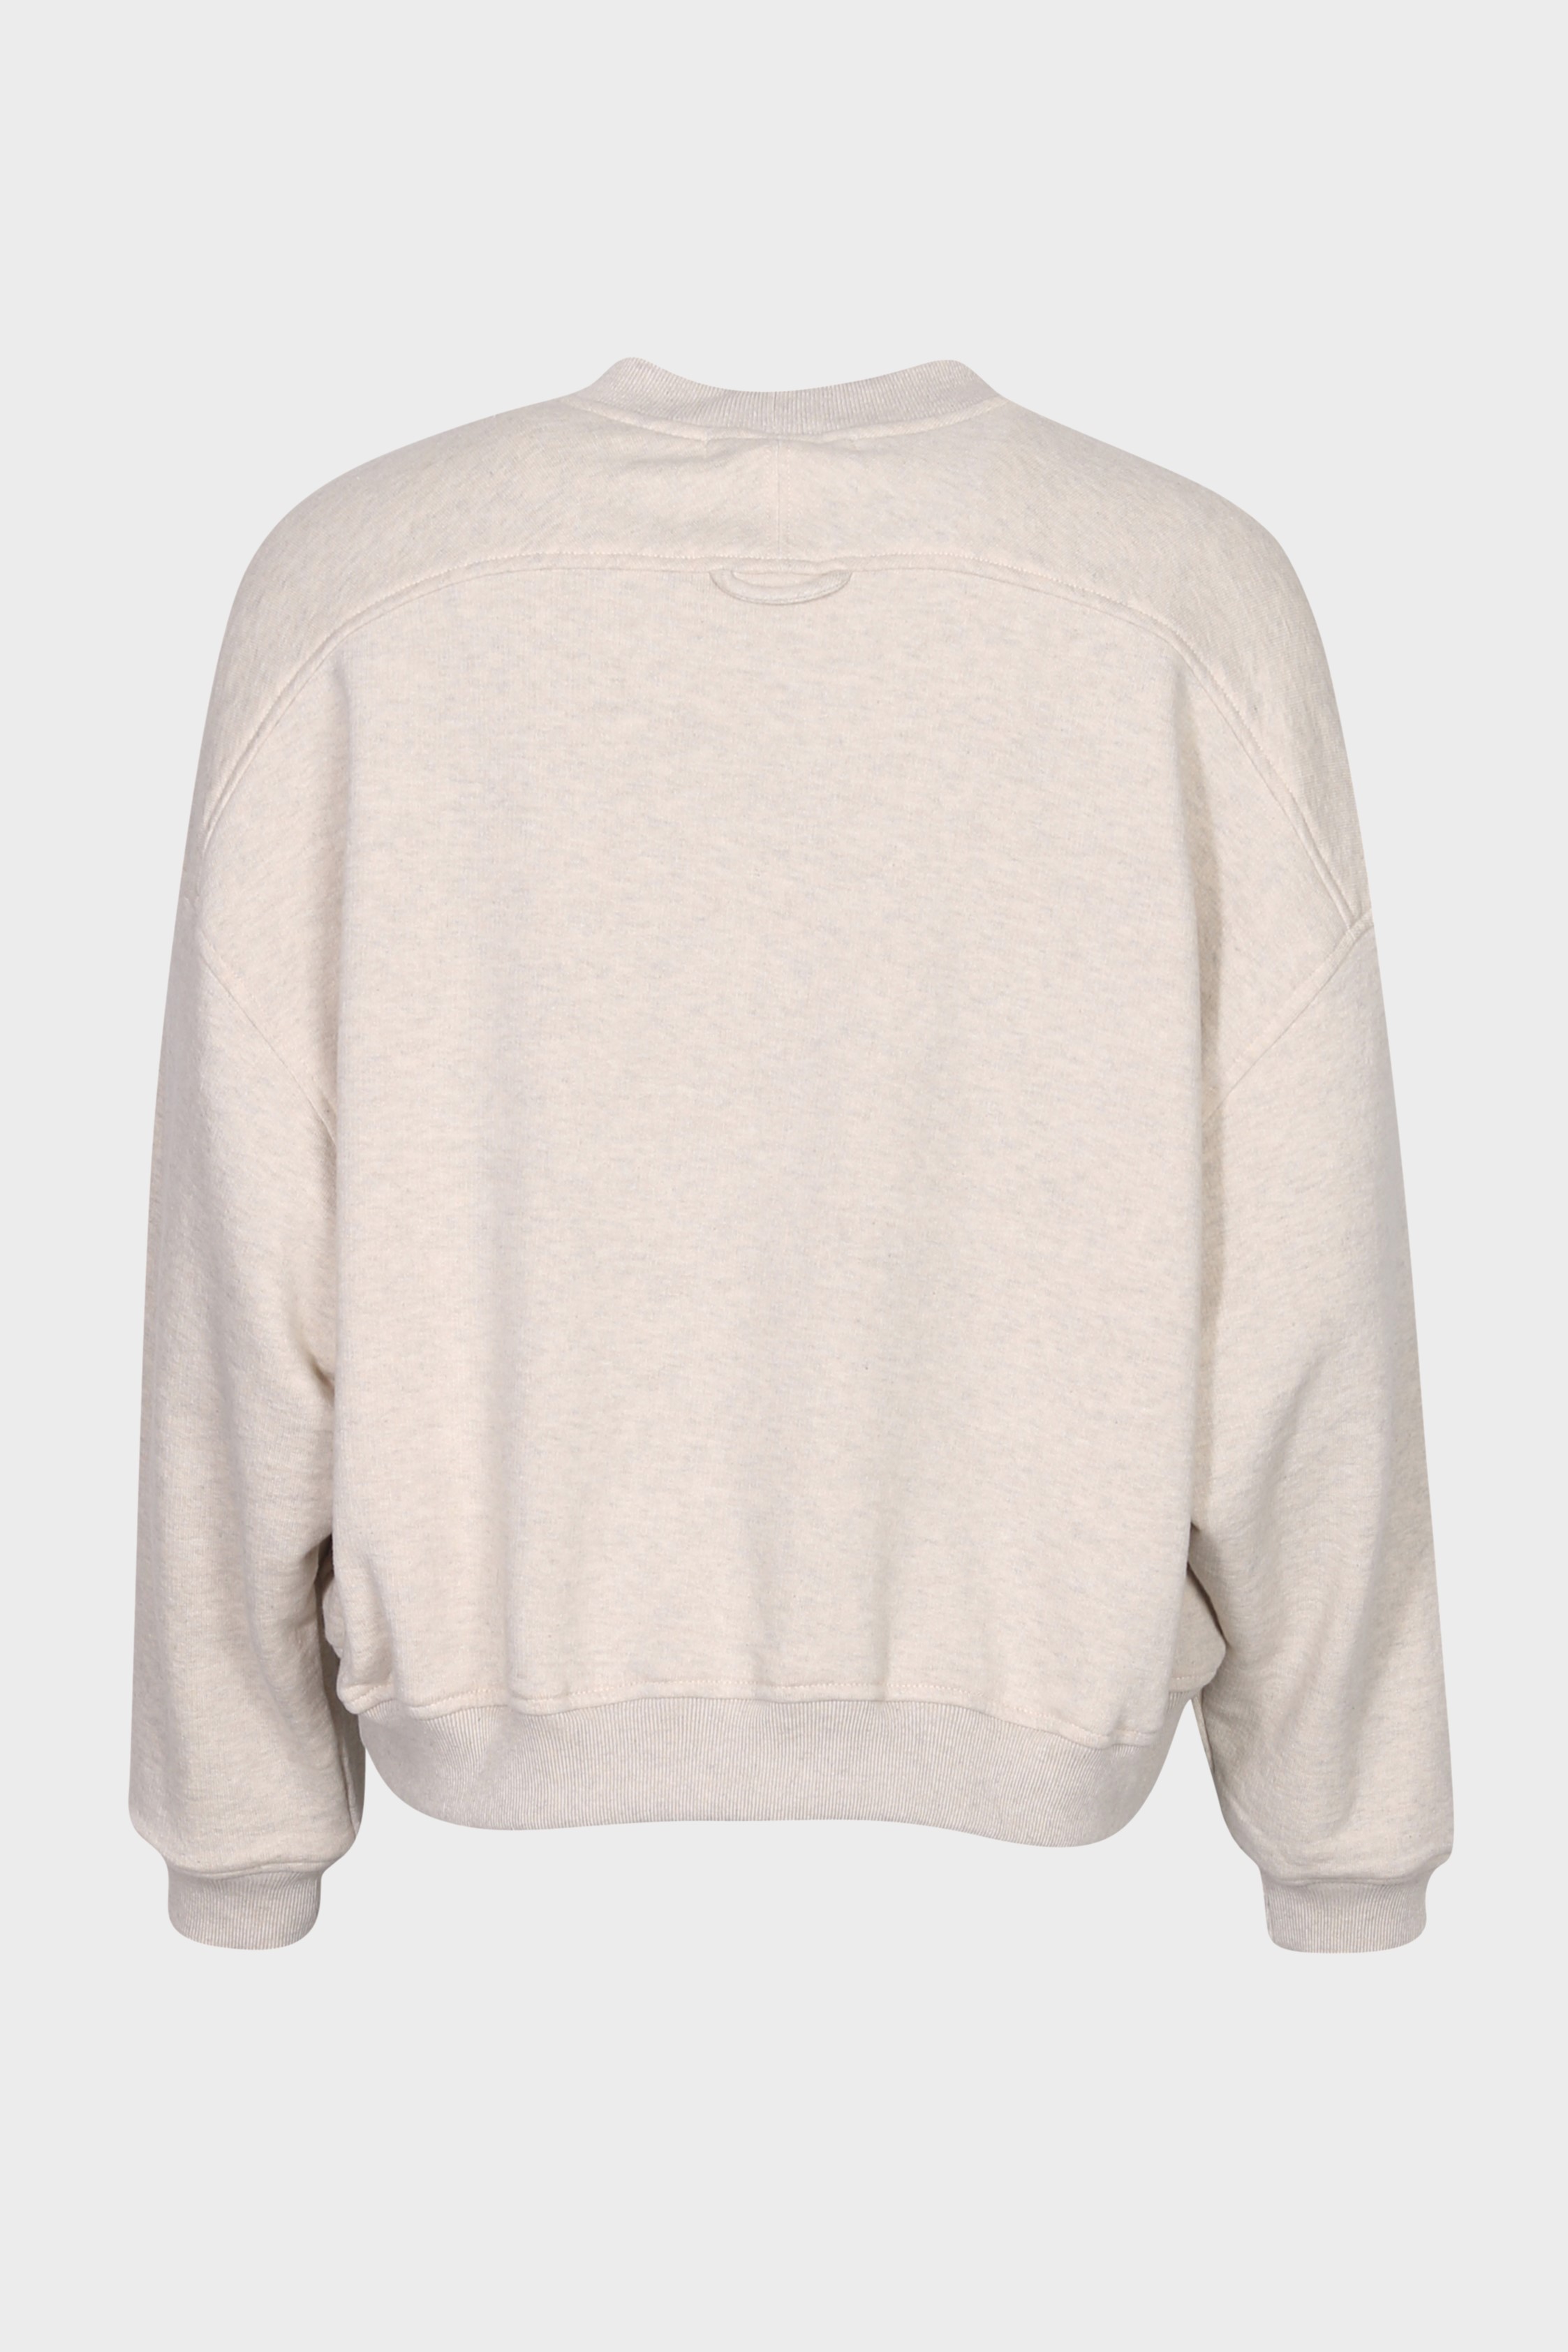 6397 Boxy Crewneck Sweater in Heather Oat XS